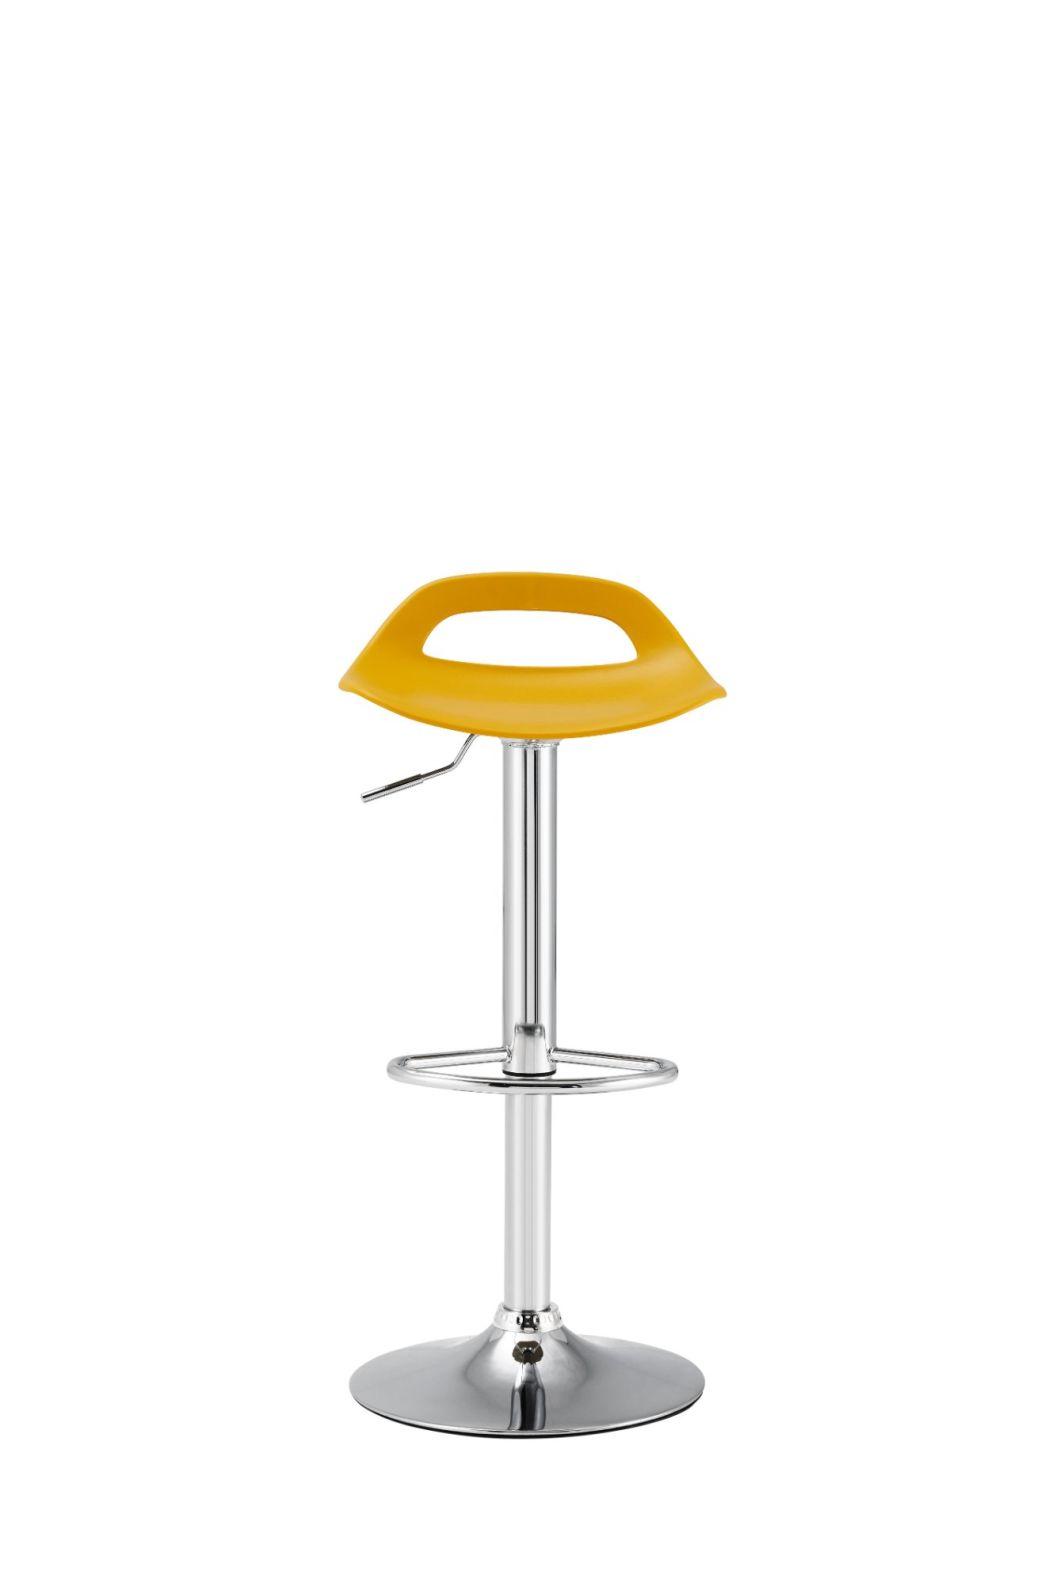 Good Supplier Acrylic Plastic Material Pub Chair Fashionable Colorful Bar Stool